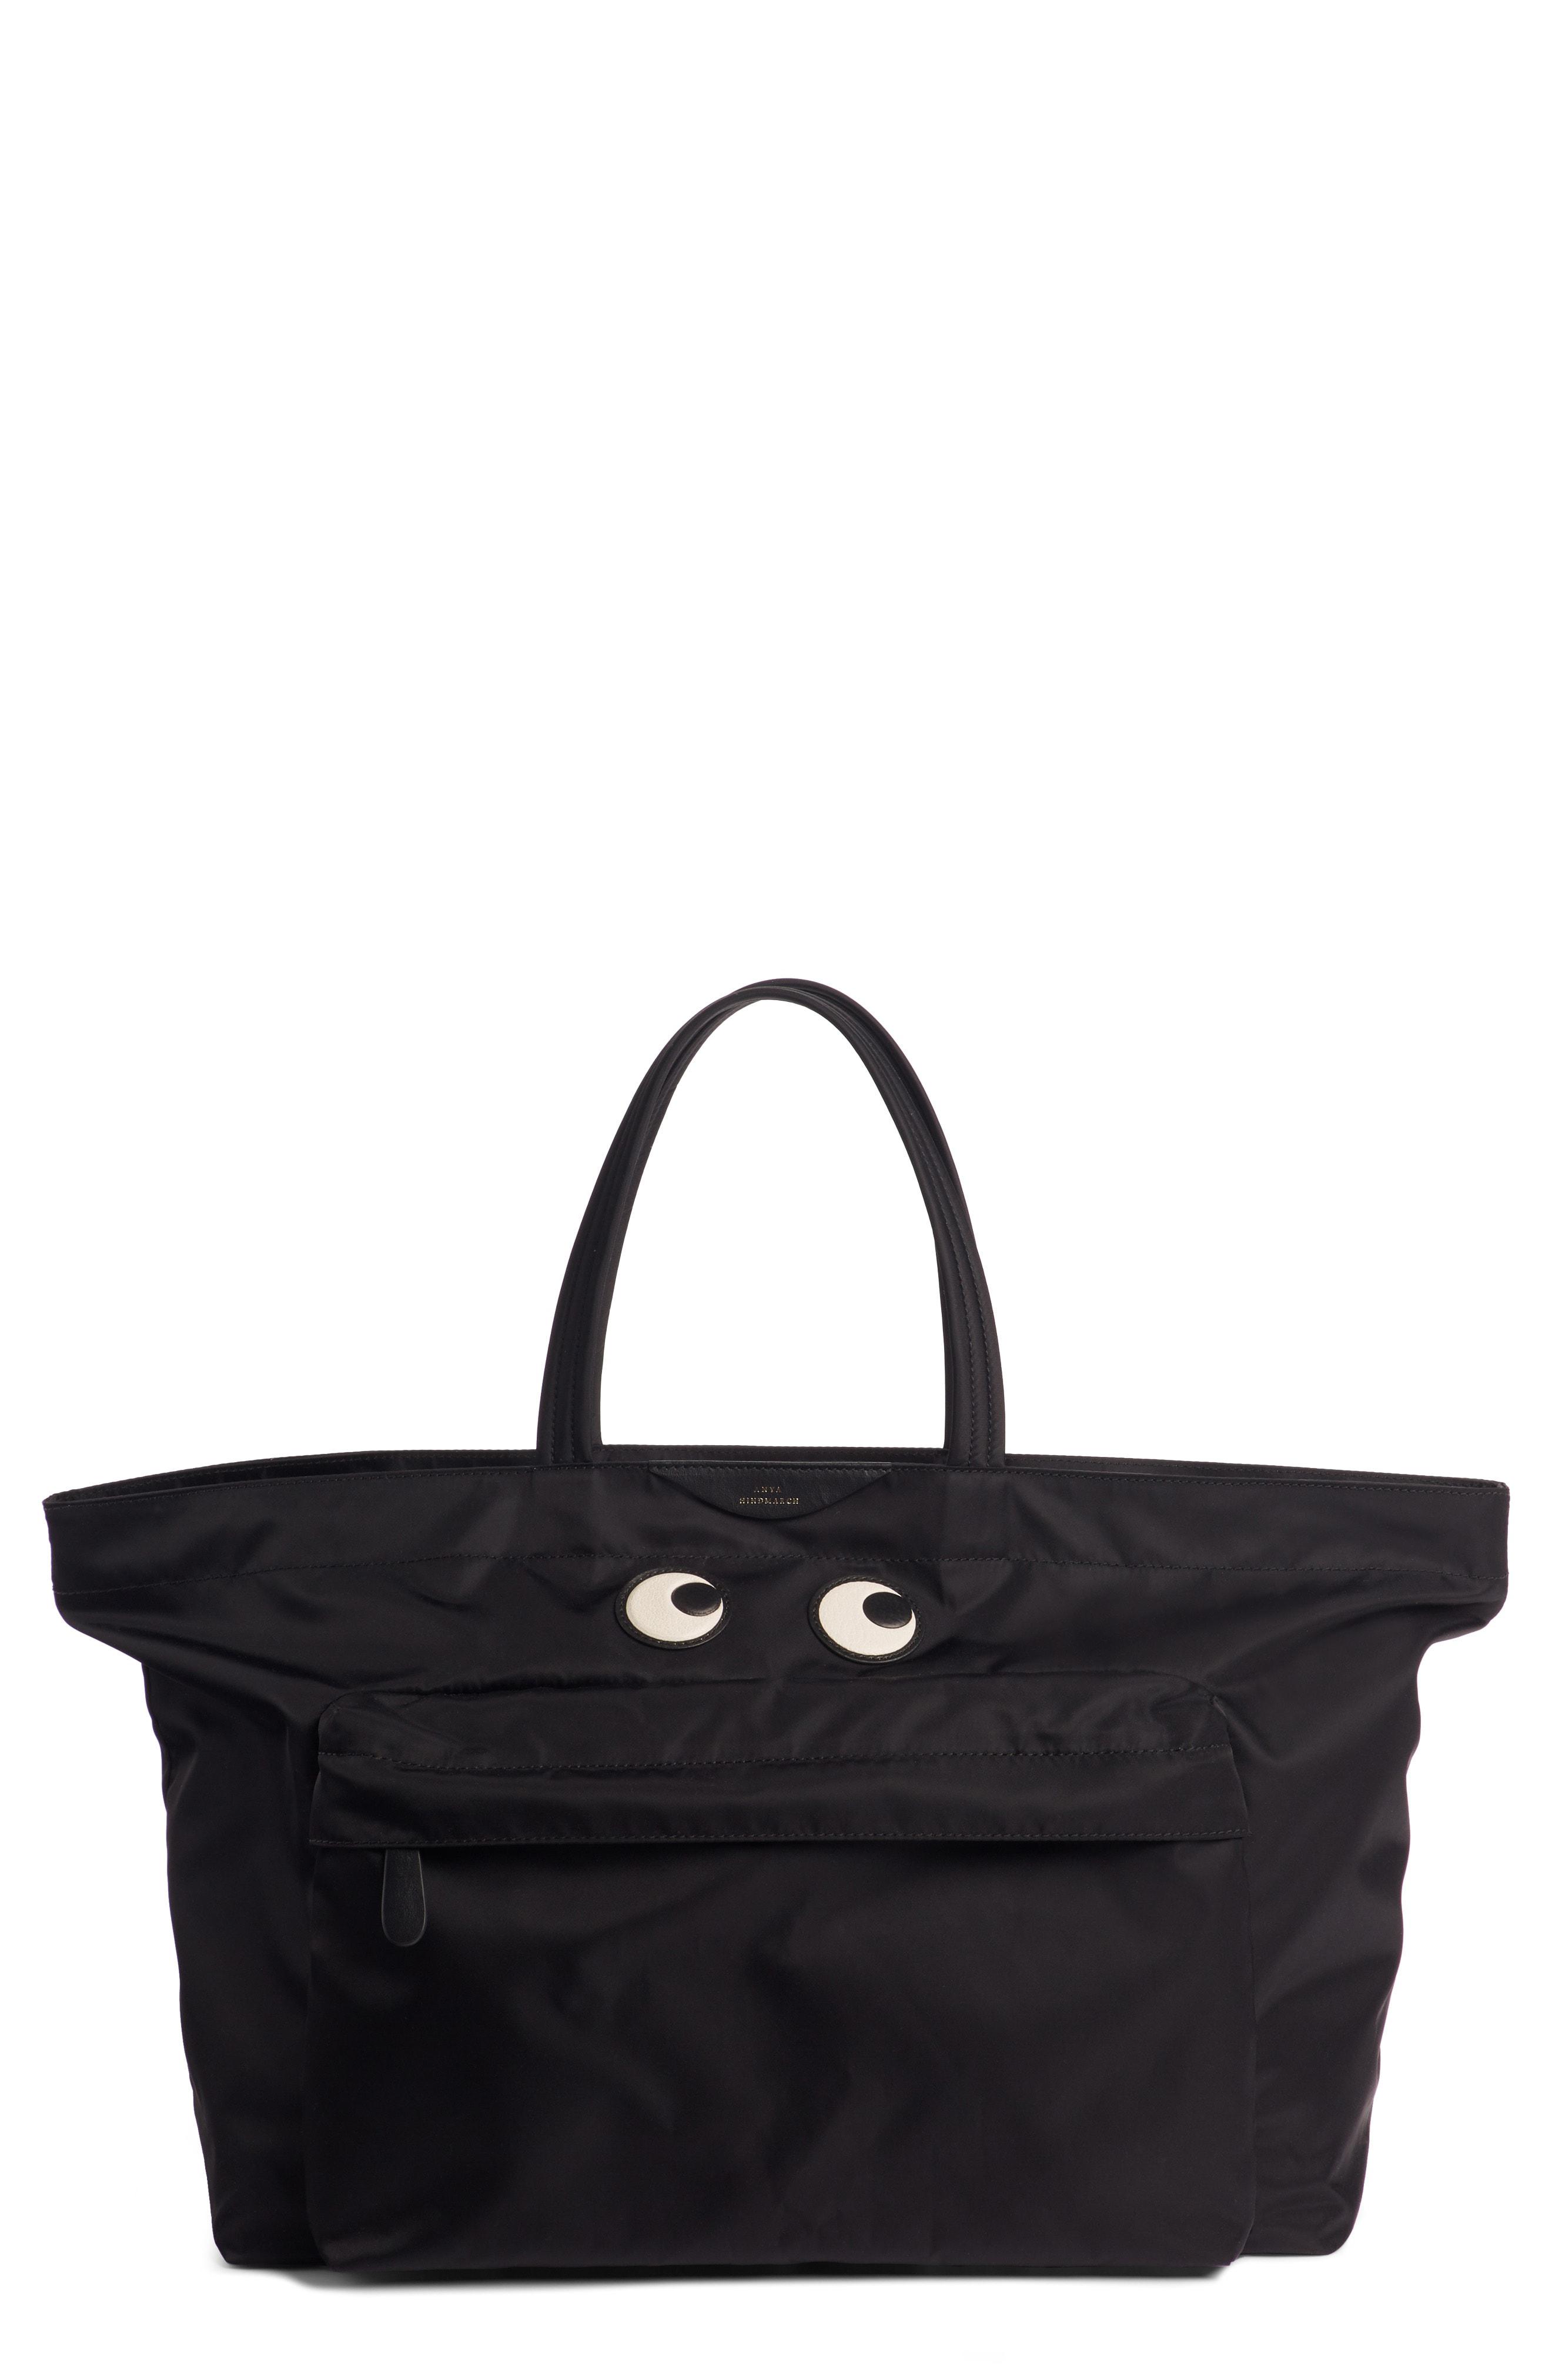 Anya Hindmarch Eyes Tote Bag Flash Sales, 55% OFF | www ...